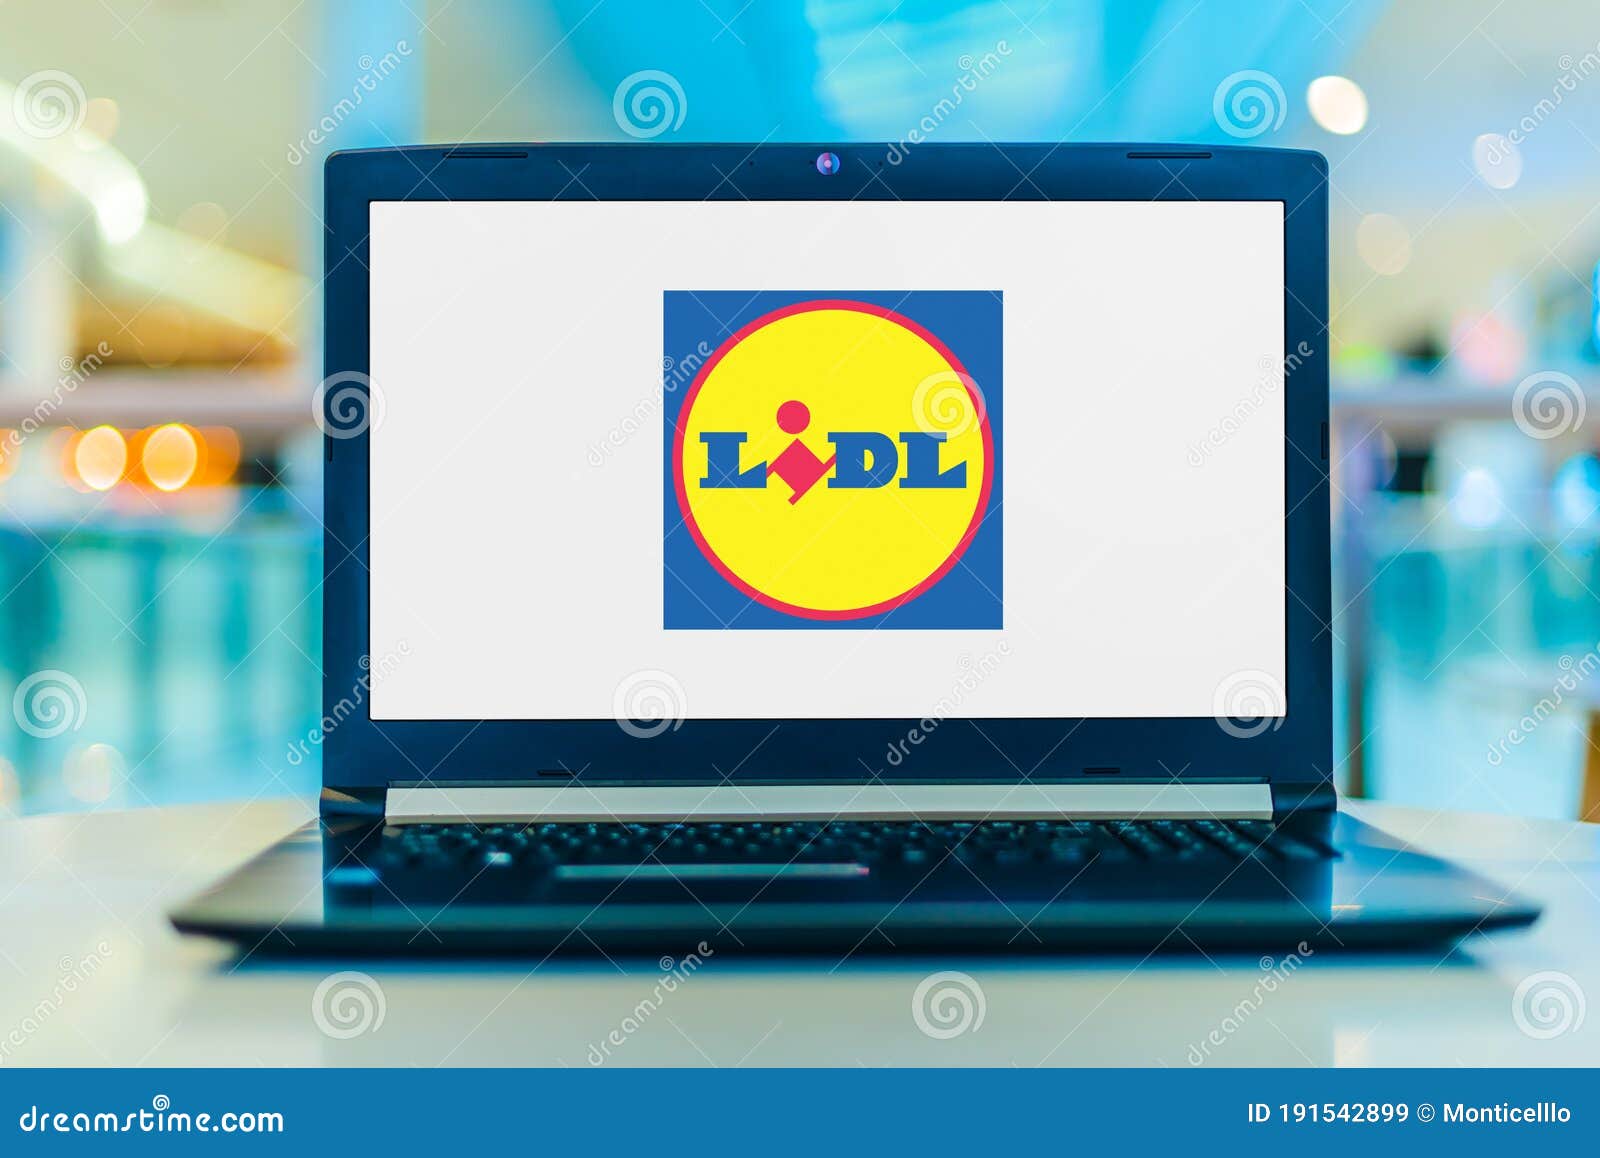 Vervreemding vraag naar Ontvangende machine Laptop Computer Displaying Logo of Lidl Editorial Stock Image - Image of  company, screen: 191542899